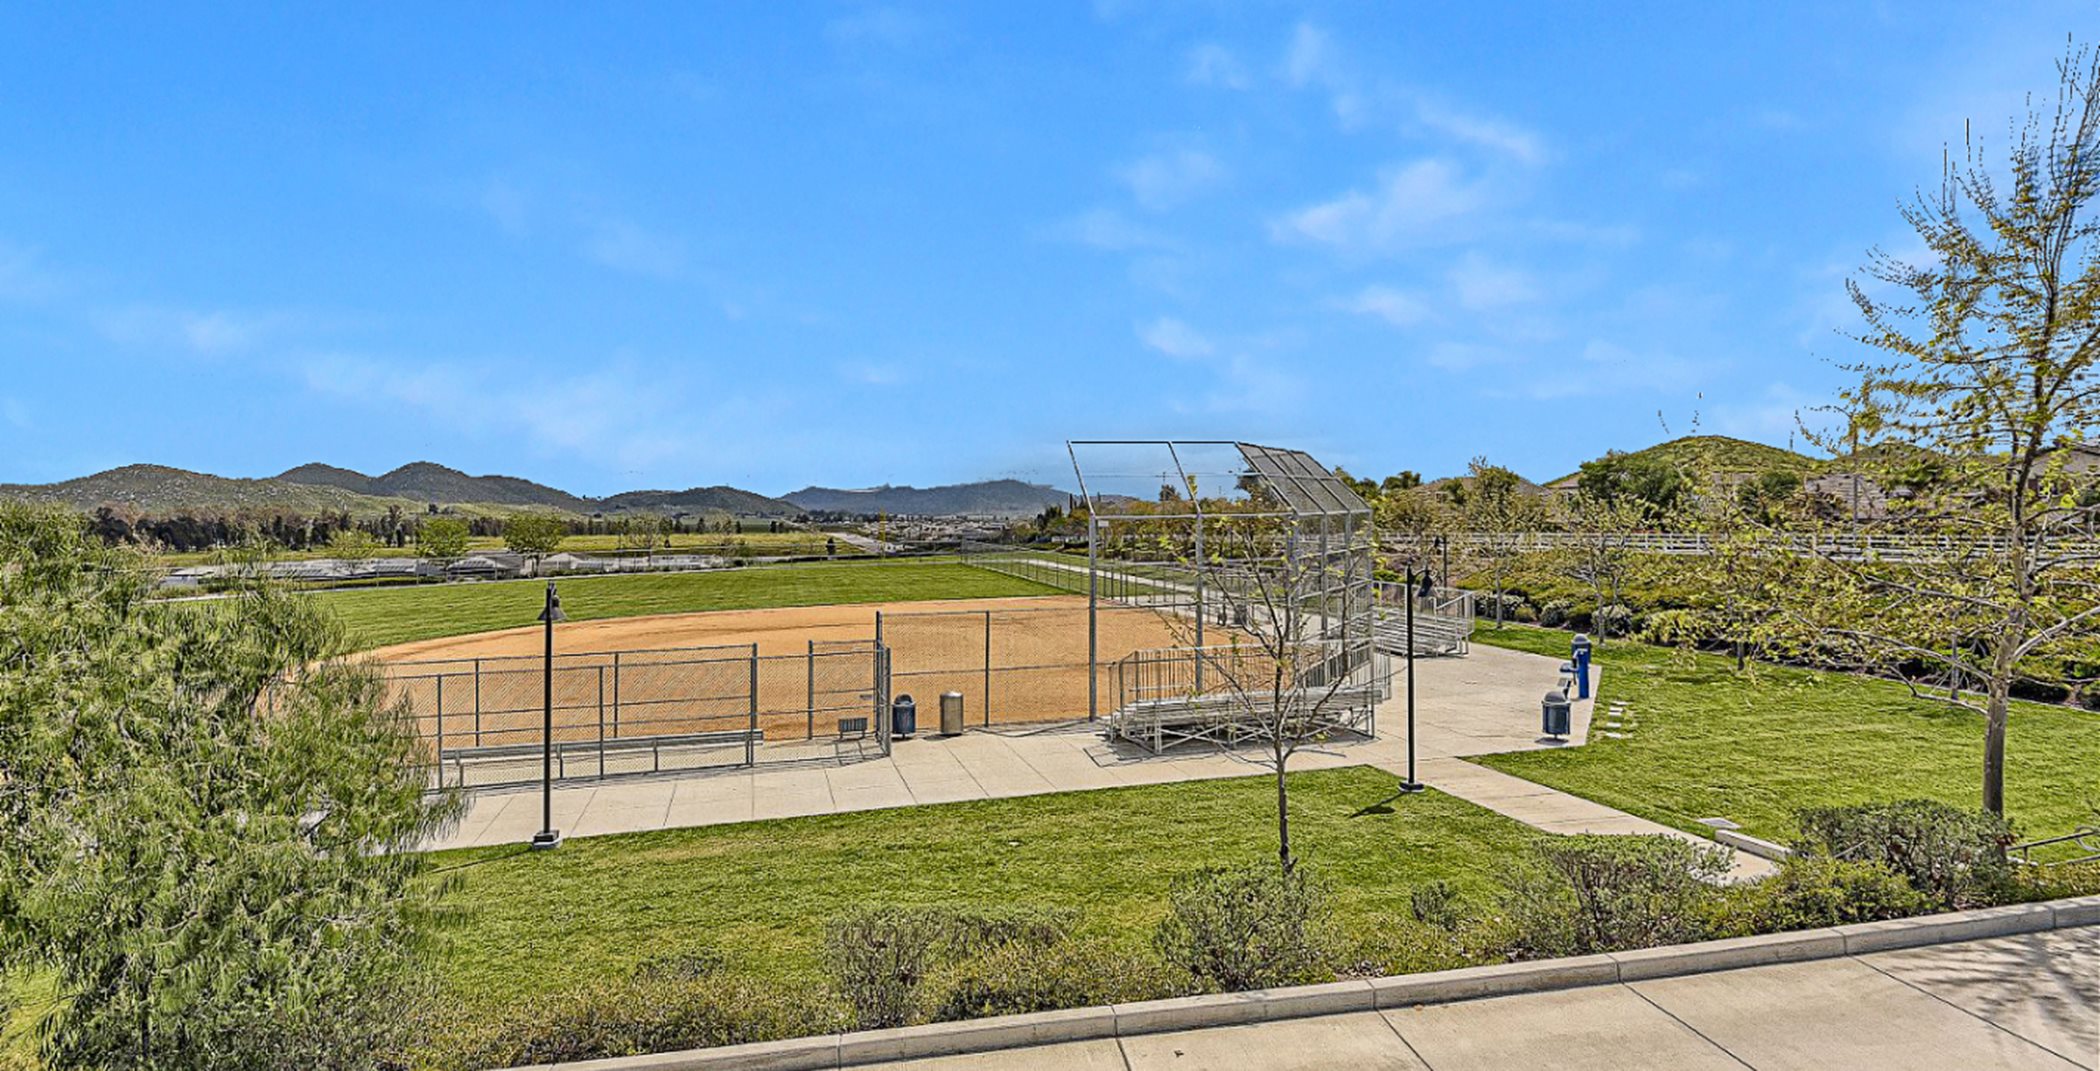 Baseball diamond at Lago Vista Sports Park